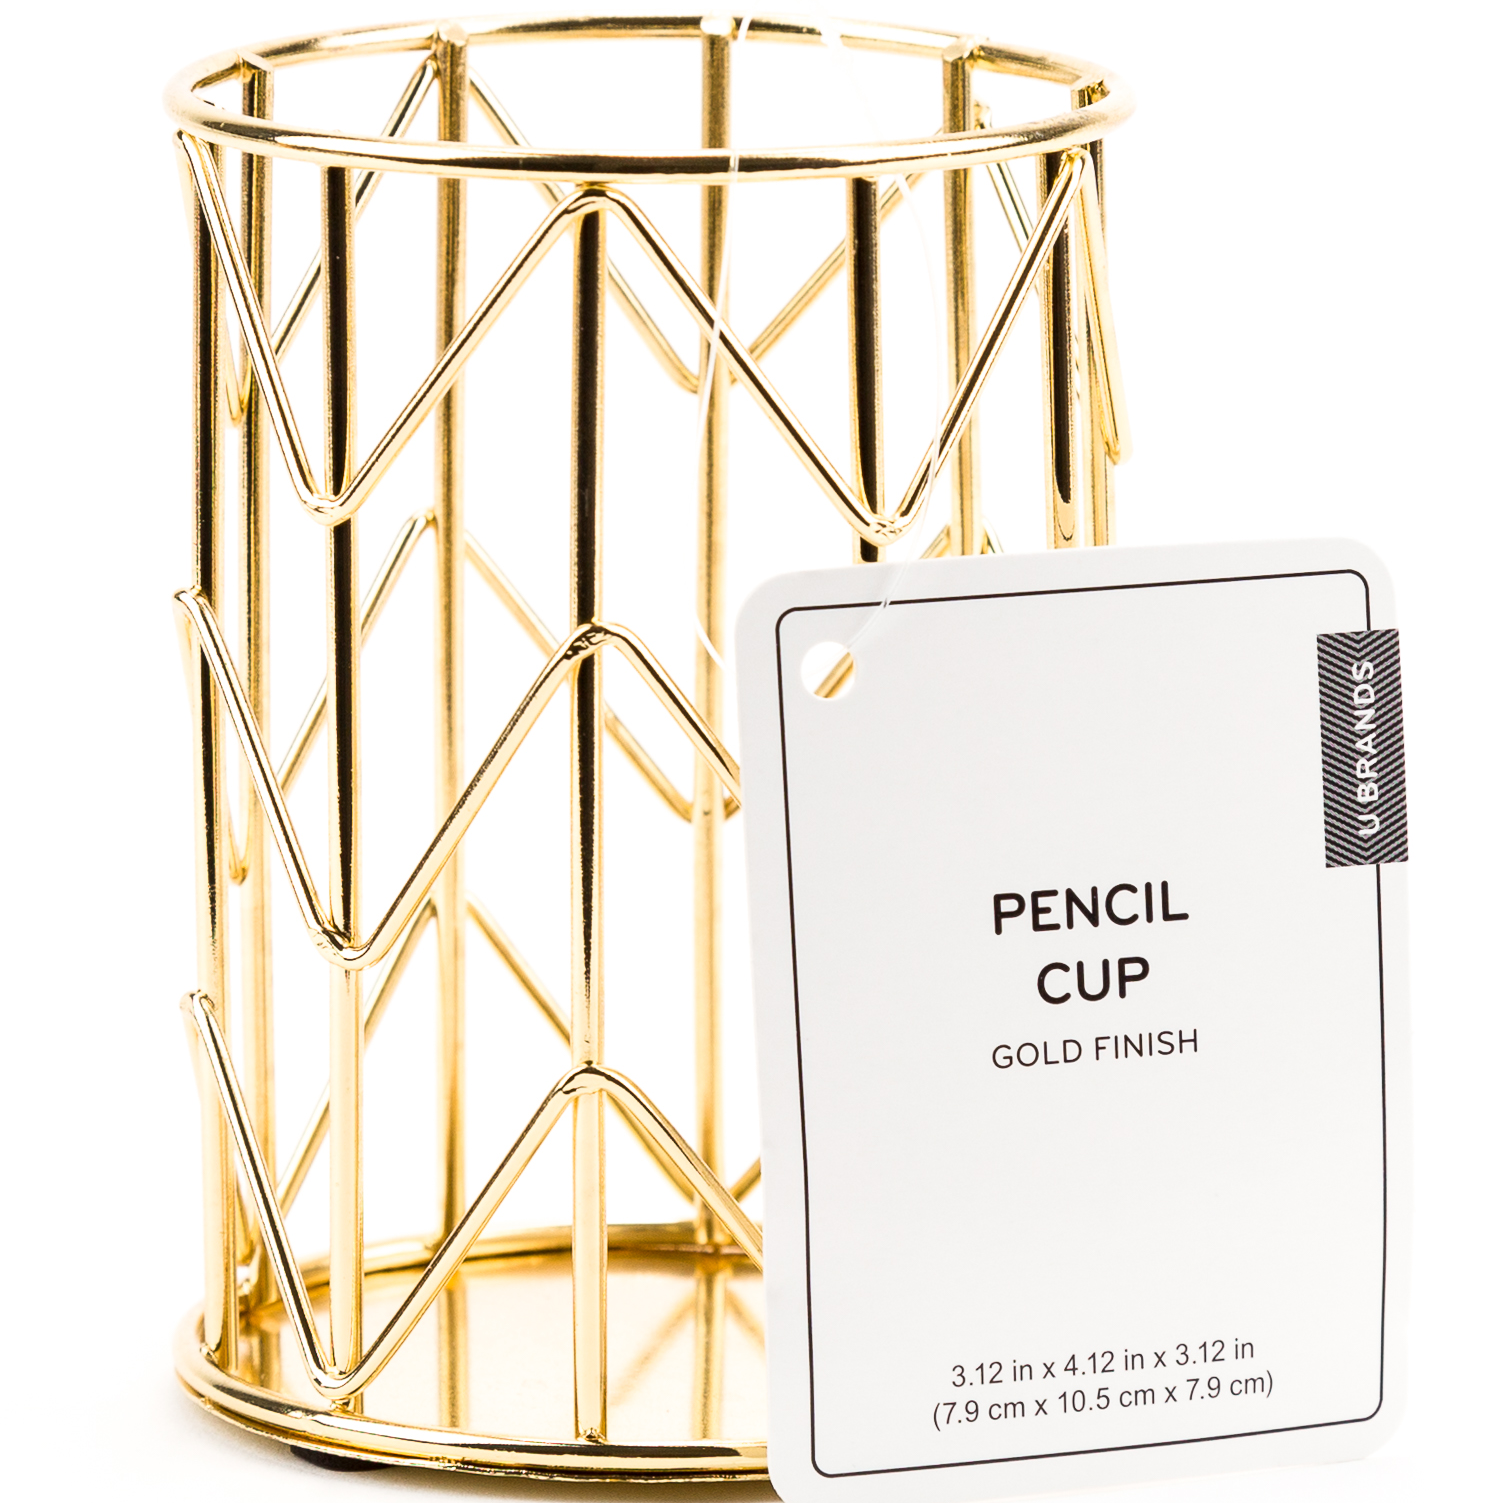 U BRAND Wire Metal Pencil Cup, Desktop Accessories, Gold Finish, 897U - image 1 of 8